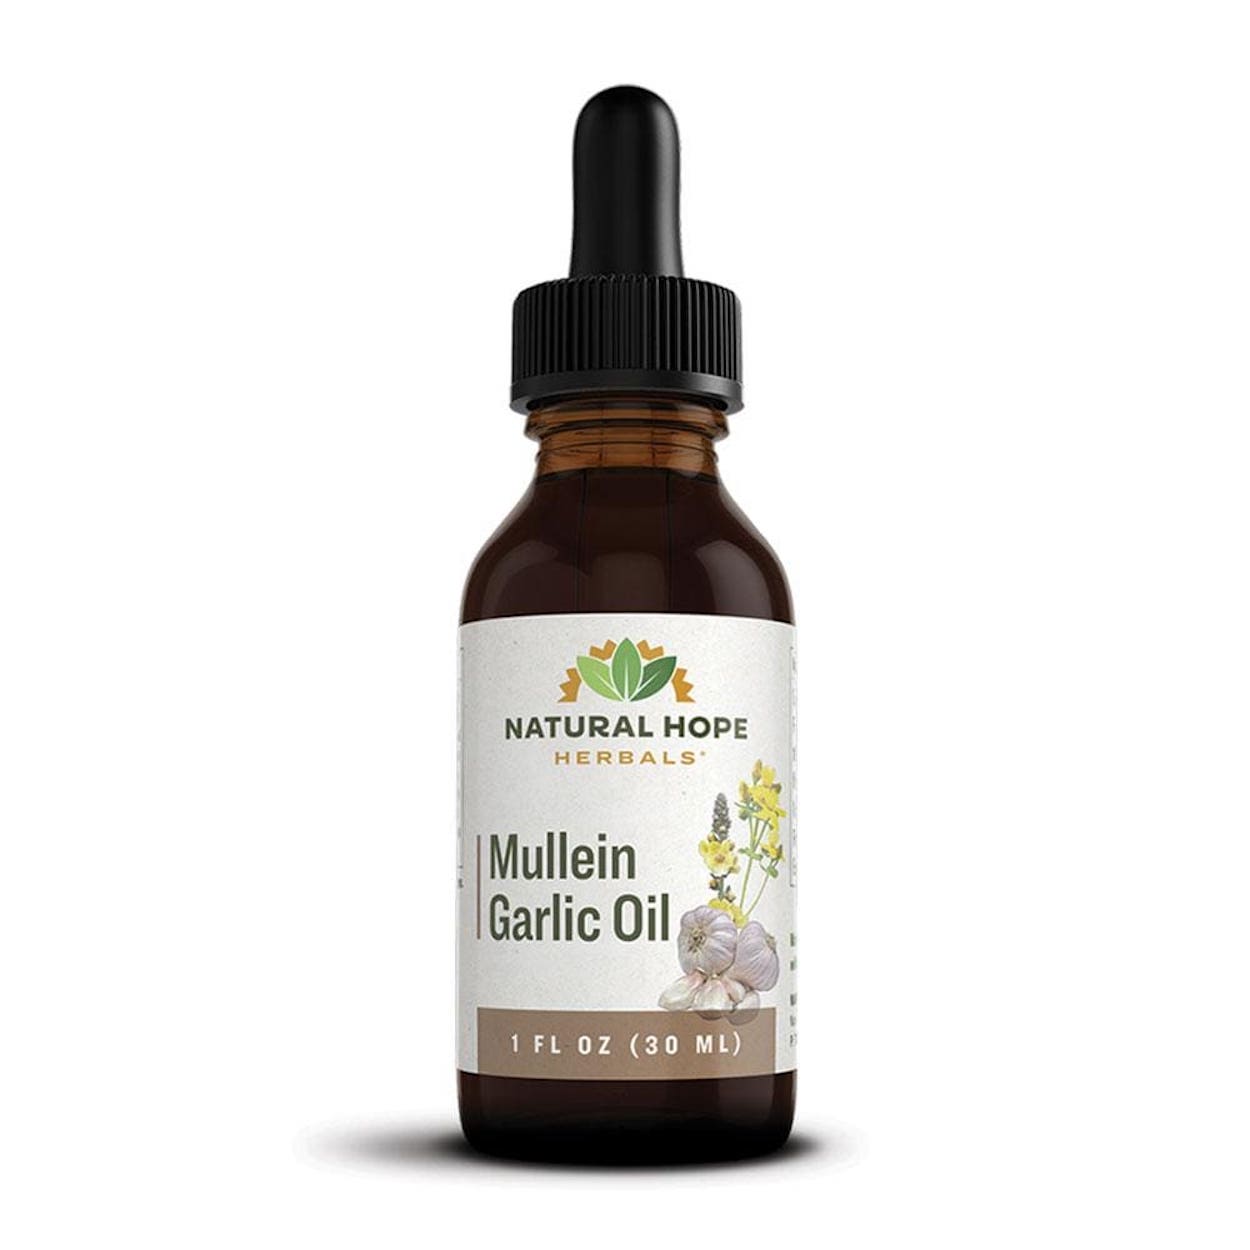 Mullein Garlic Oil - Natural Hope Herbals